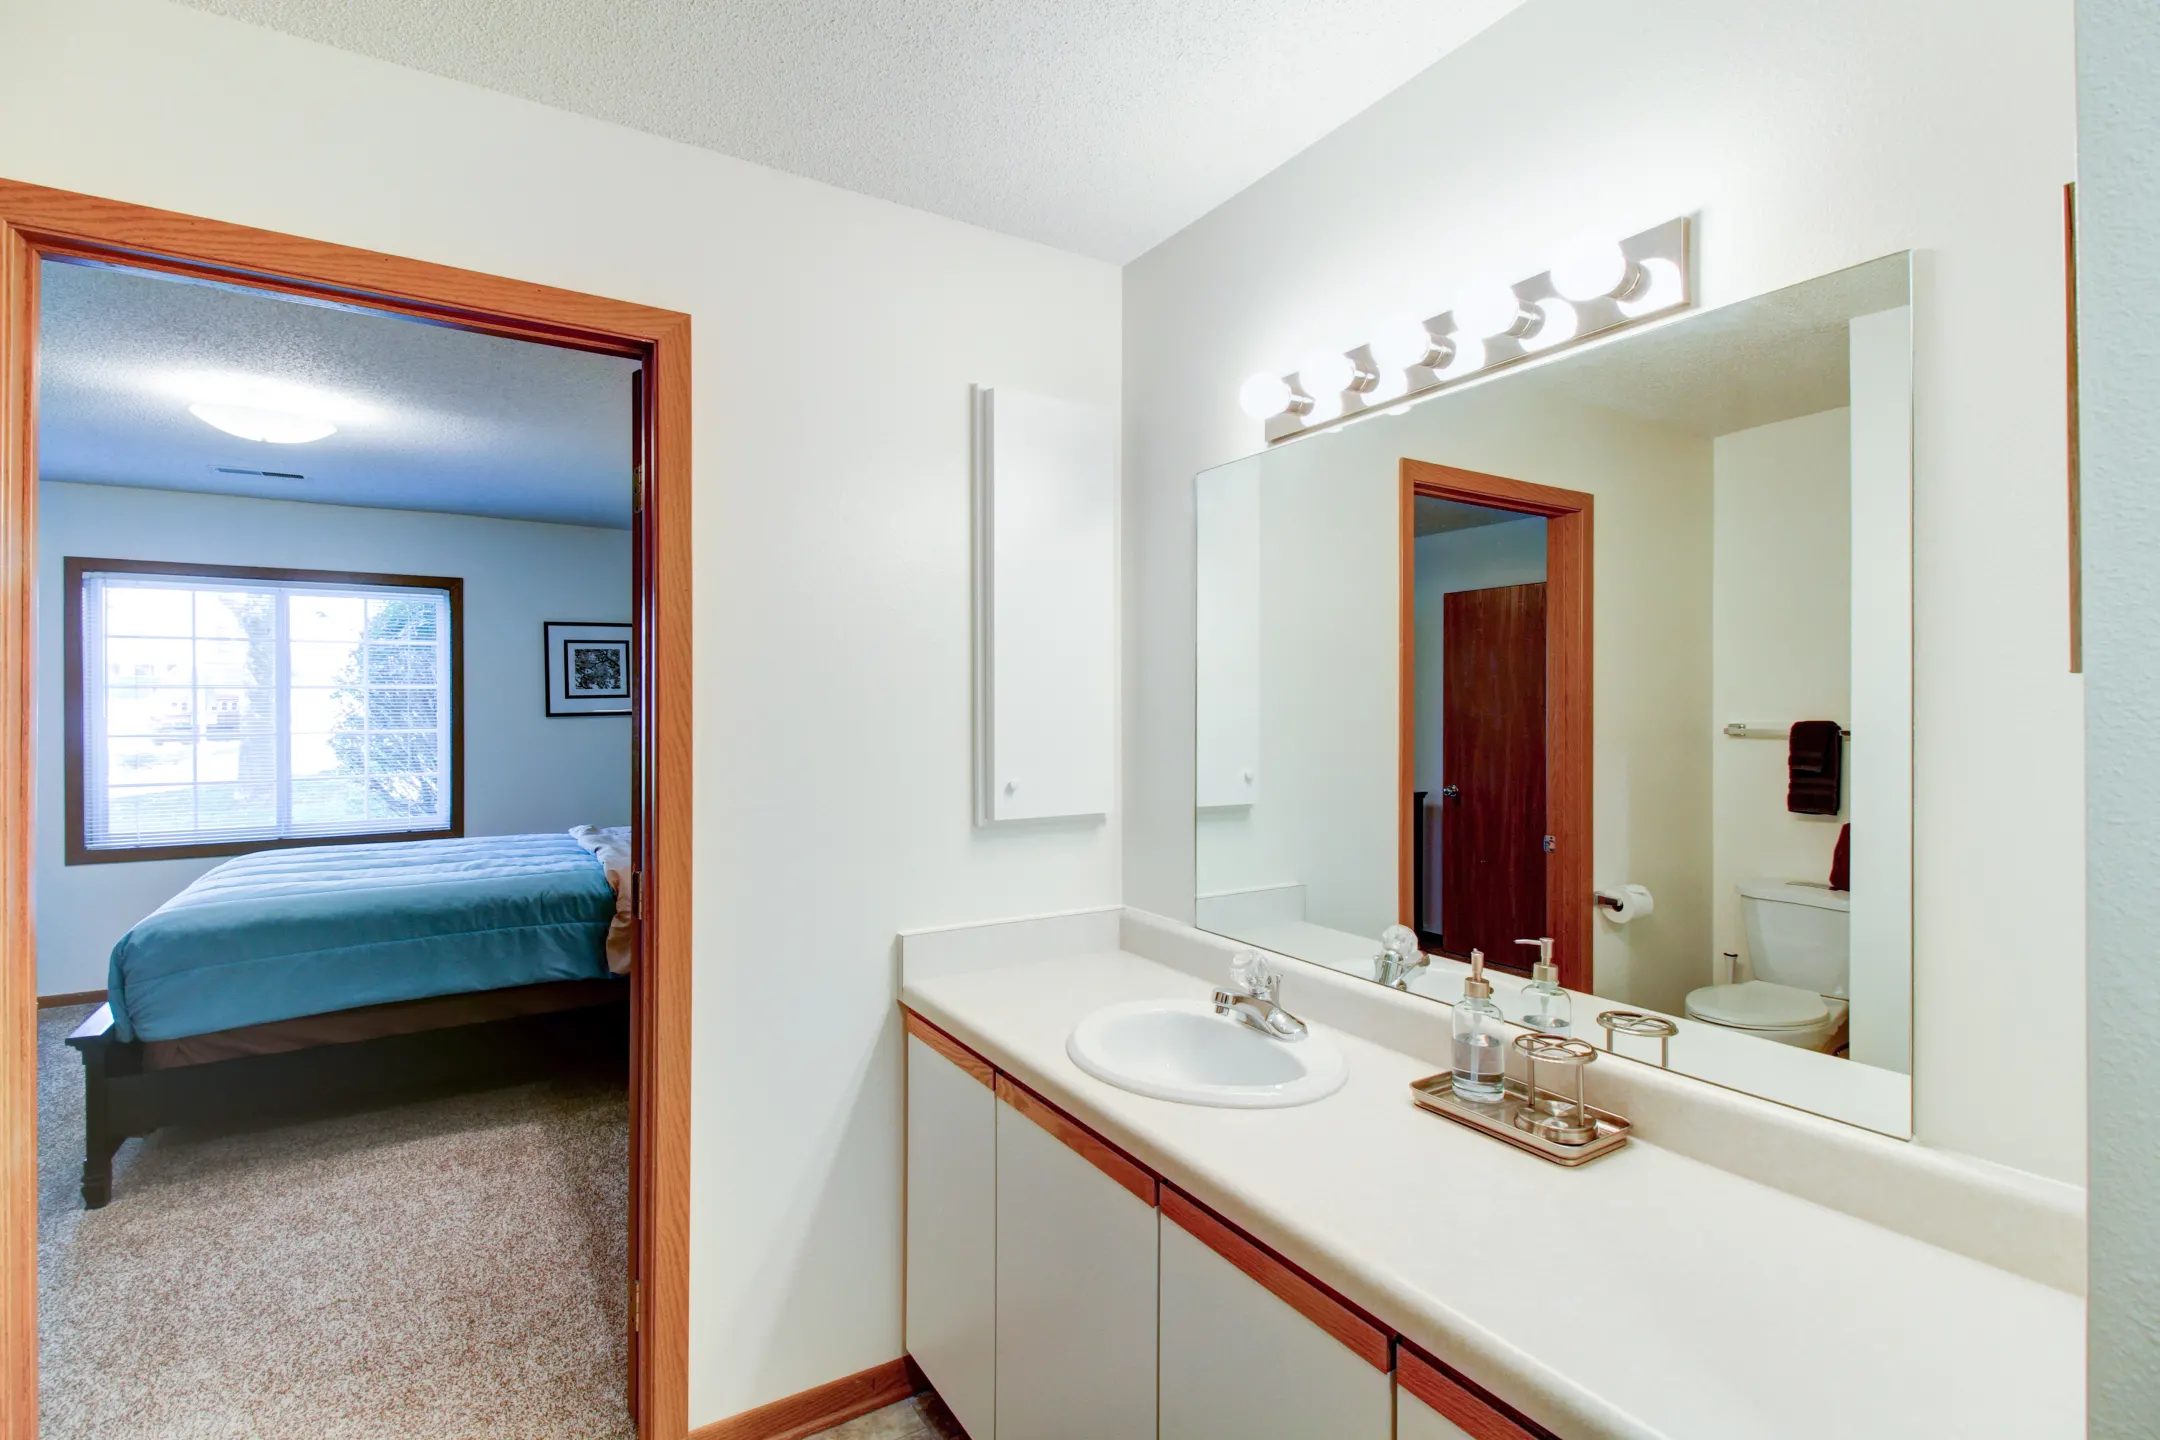 Bathroom - Linden West Apartments - Indianola, IA